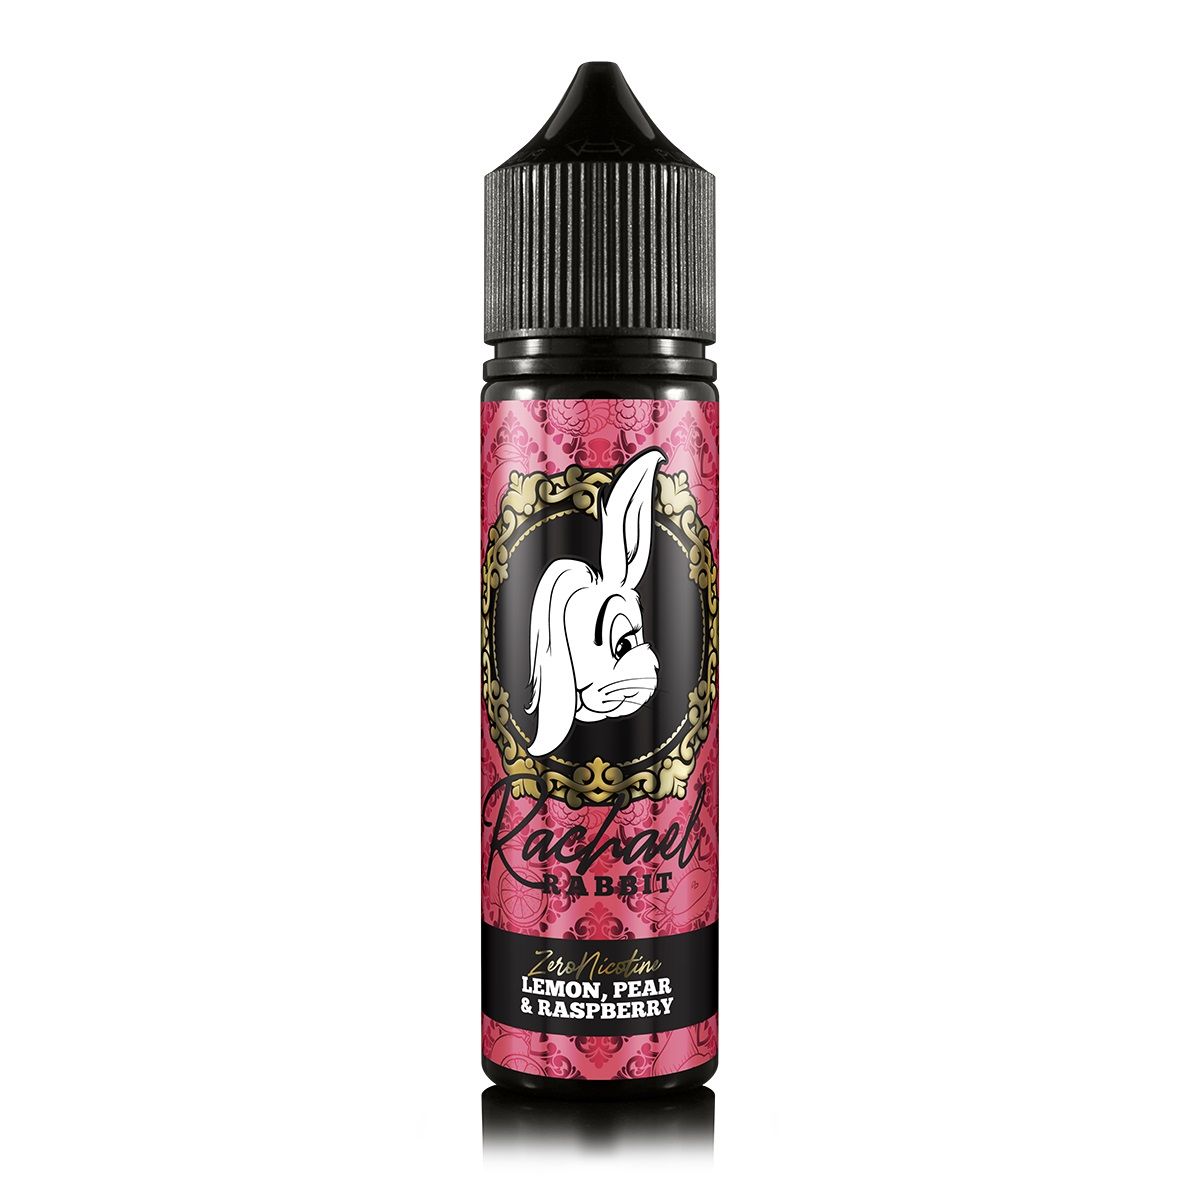 Rachael Rabbit - Lemon Pear Raspberry 50ML Shortfill - Dampfpalast - E-Zigarette Online Kaufen